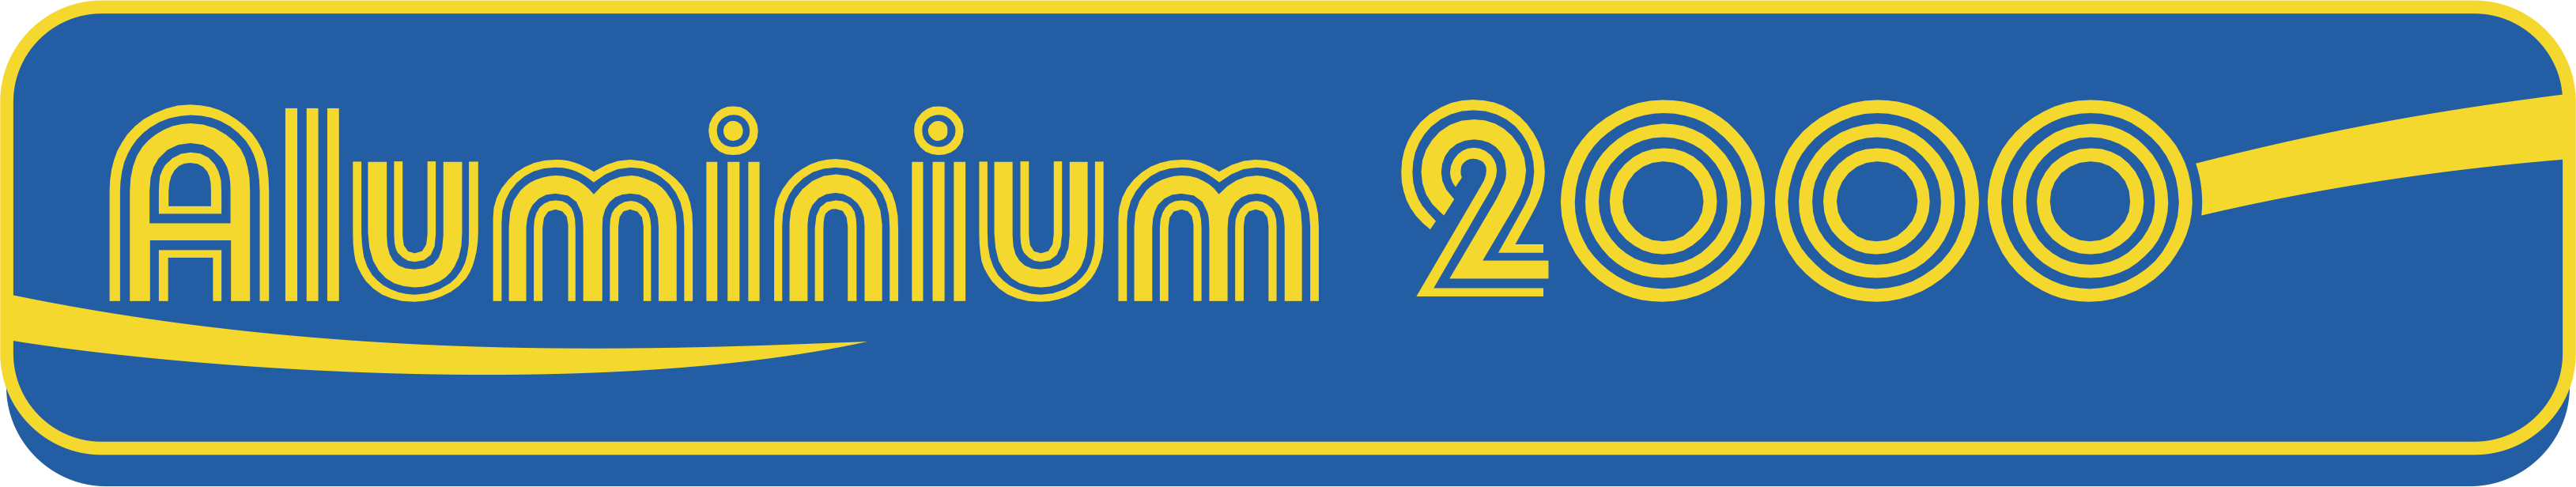 Aluminum 2000 (pty) Ltd logo